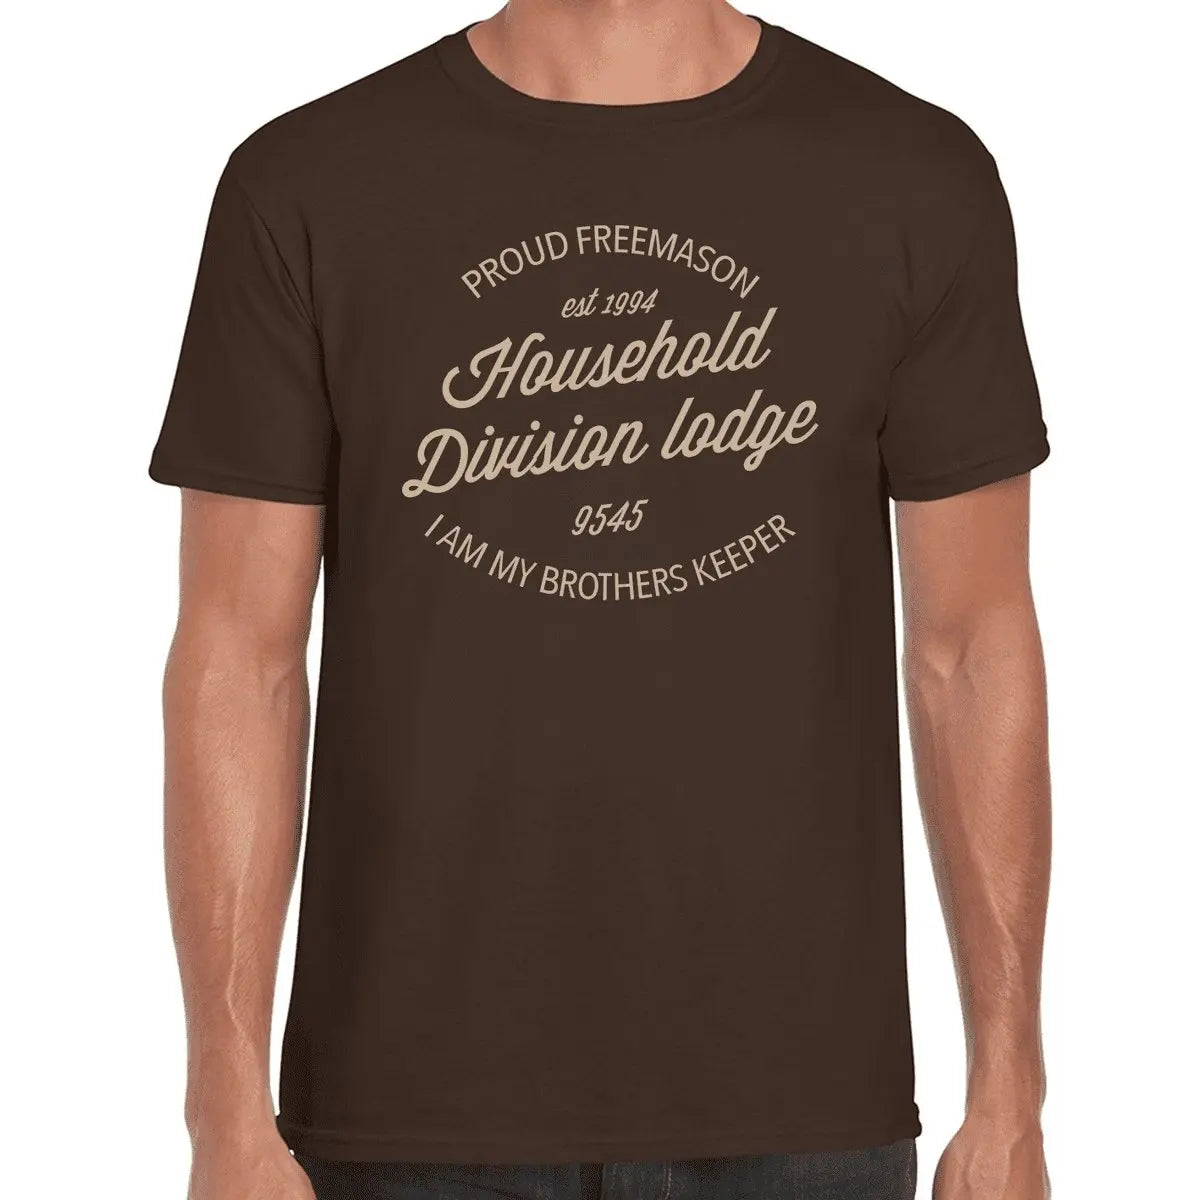 Household Division Lodge 9545 Vintage T Shirt redplume